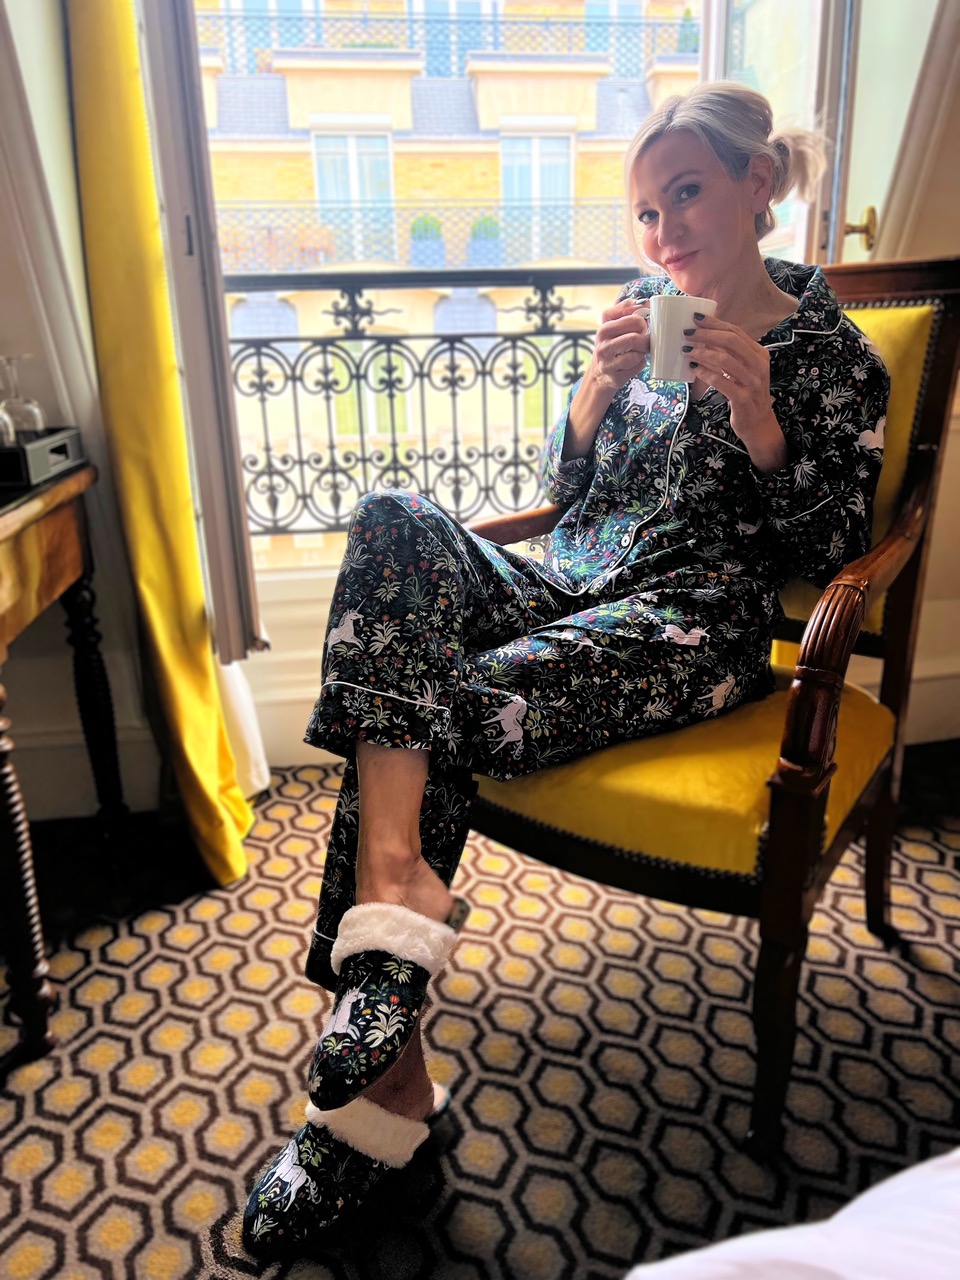 Lifestyle influencer, Jamie Lewinger of More Than Turquoise wearing Printfresh Unicorn Garden pajamas in Paris 